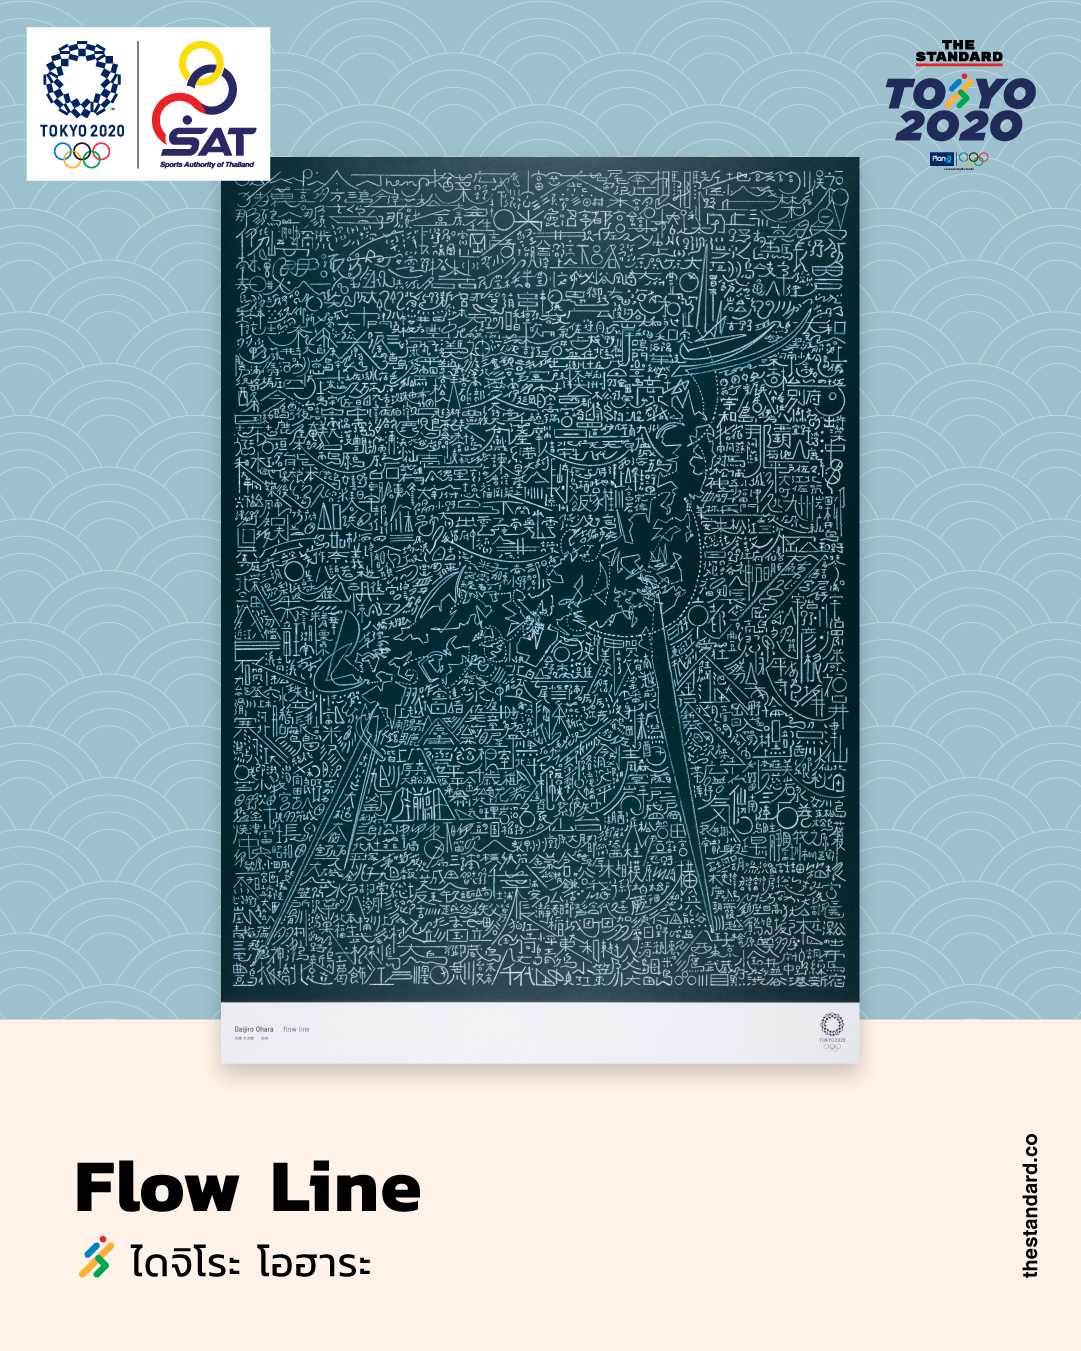 Flow Line โดย ไดจิโระ โอฮาระ 